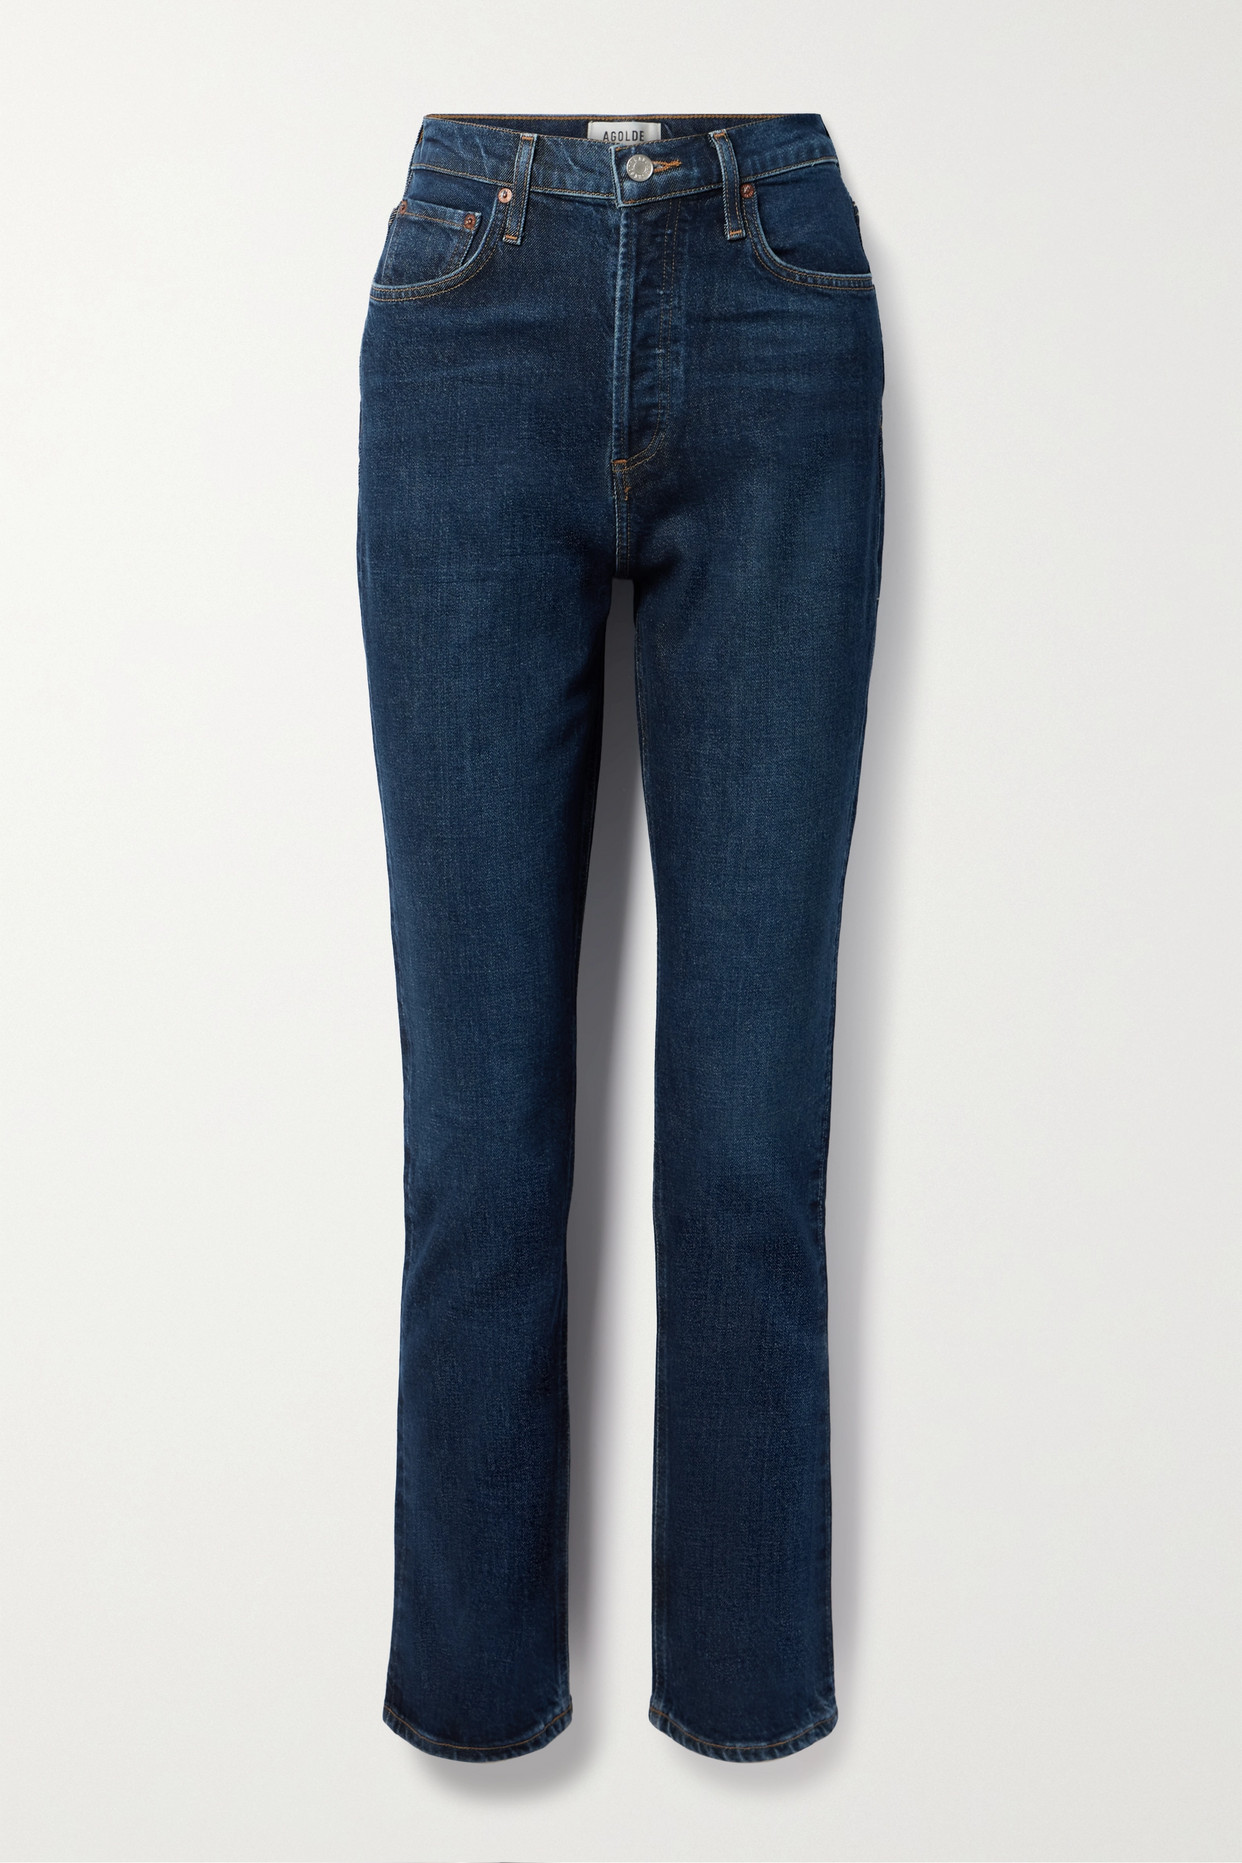 + Net Sustain Freya High-Rise Slim-Leg Organic Jeans